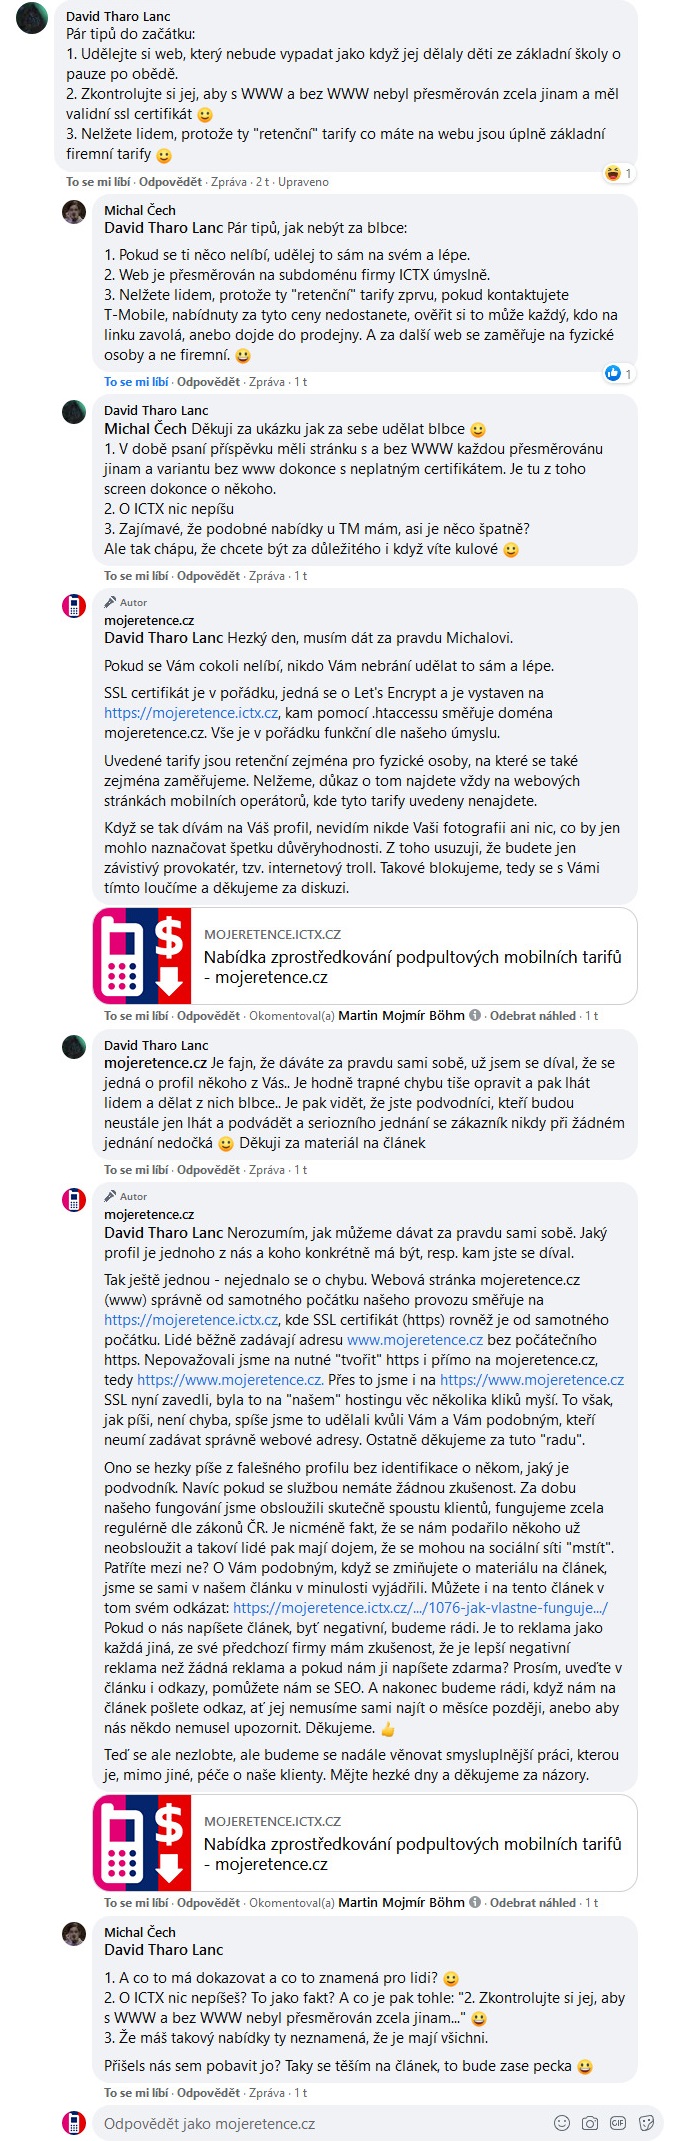 Blbec anonym na FB o článku na mojeretence.cz